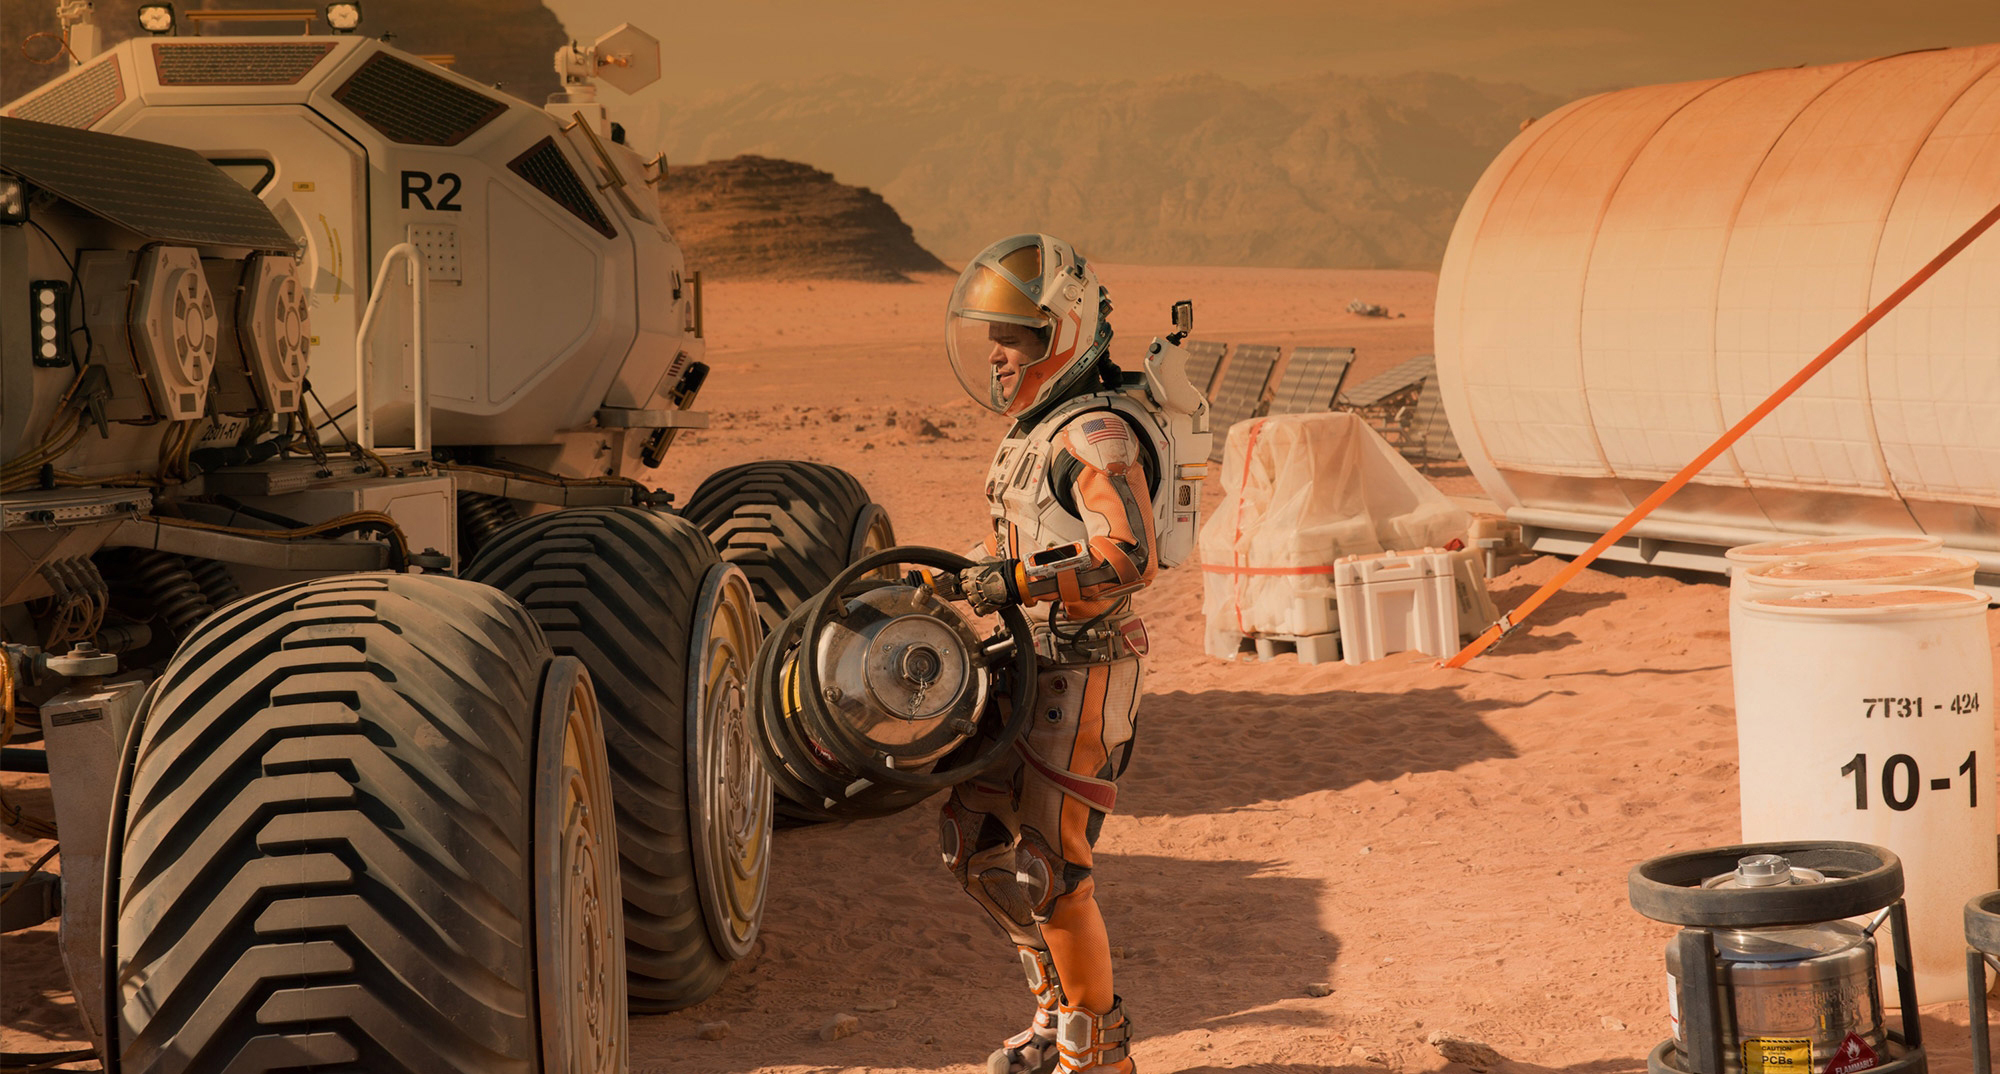 Actor Matt Damon colonizes Mars in the movie The Martian. (Photo courtesy of 20th Century Fox)